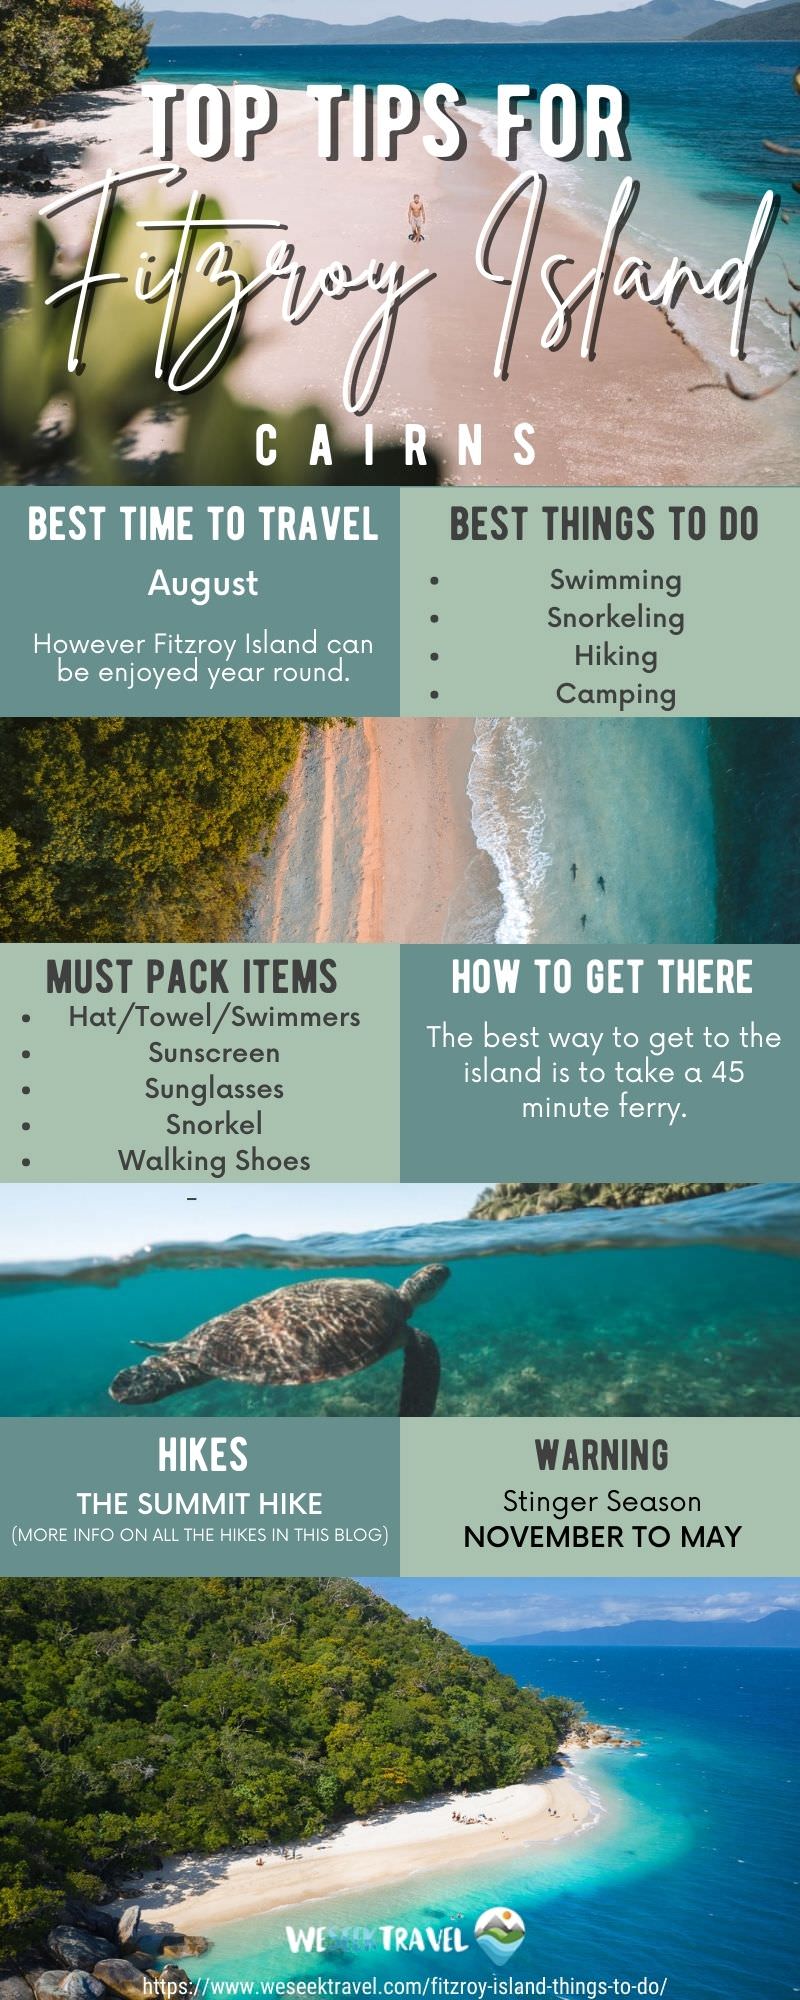 Fitzroy Island travel tips infographic